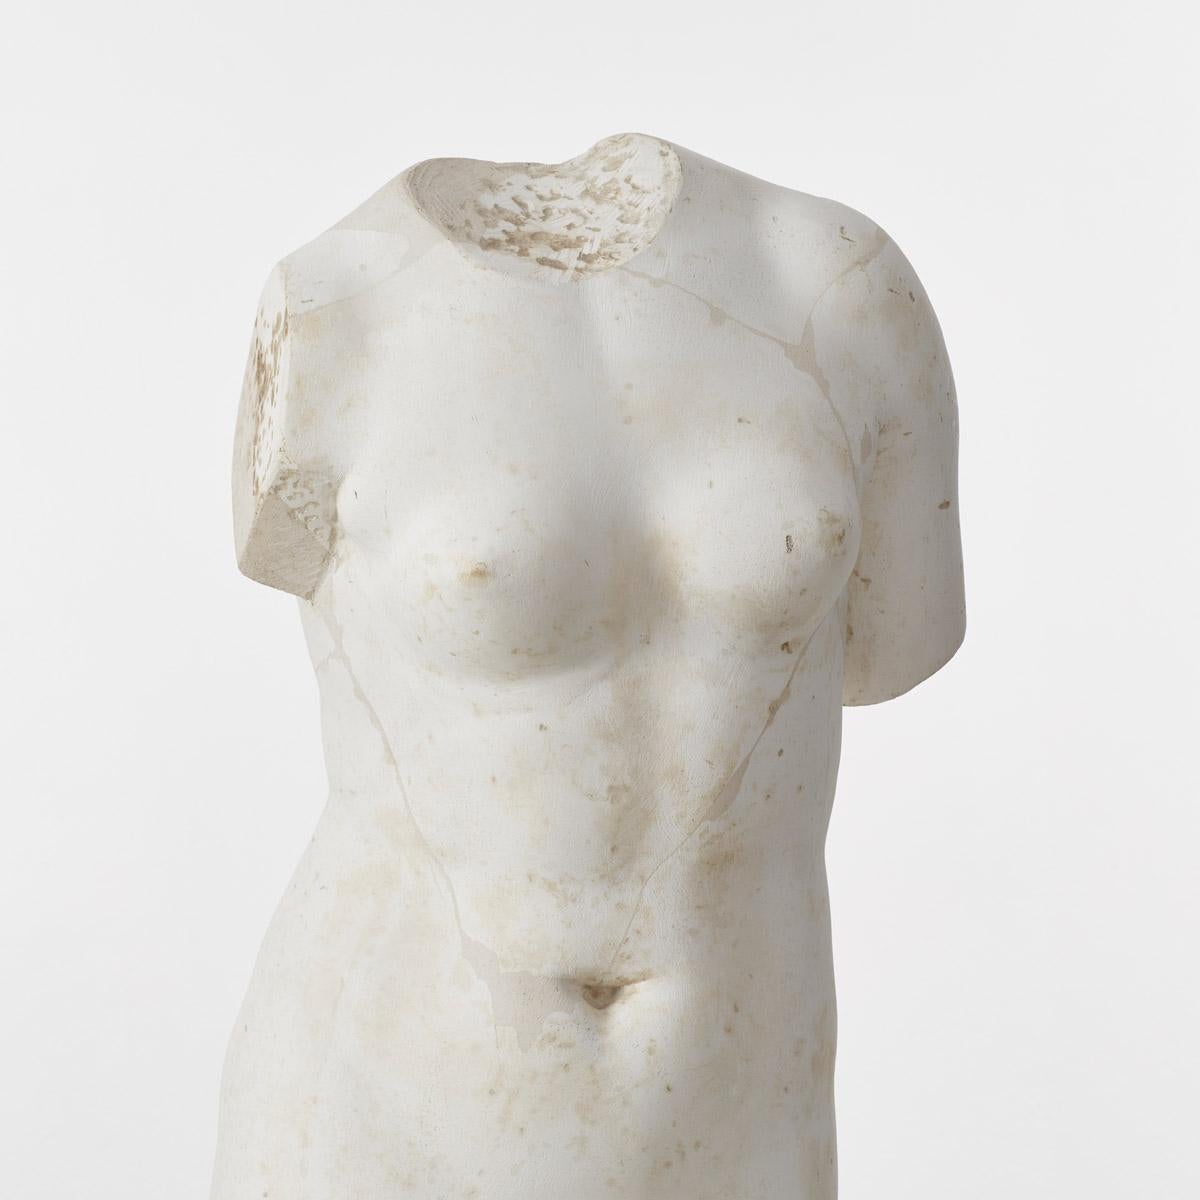 20th century British museum plaster cast of classical bust 1